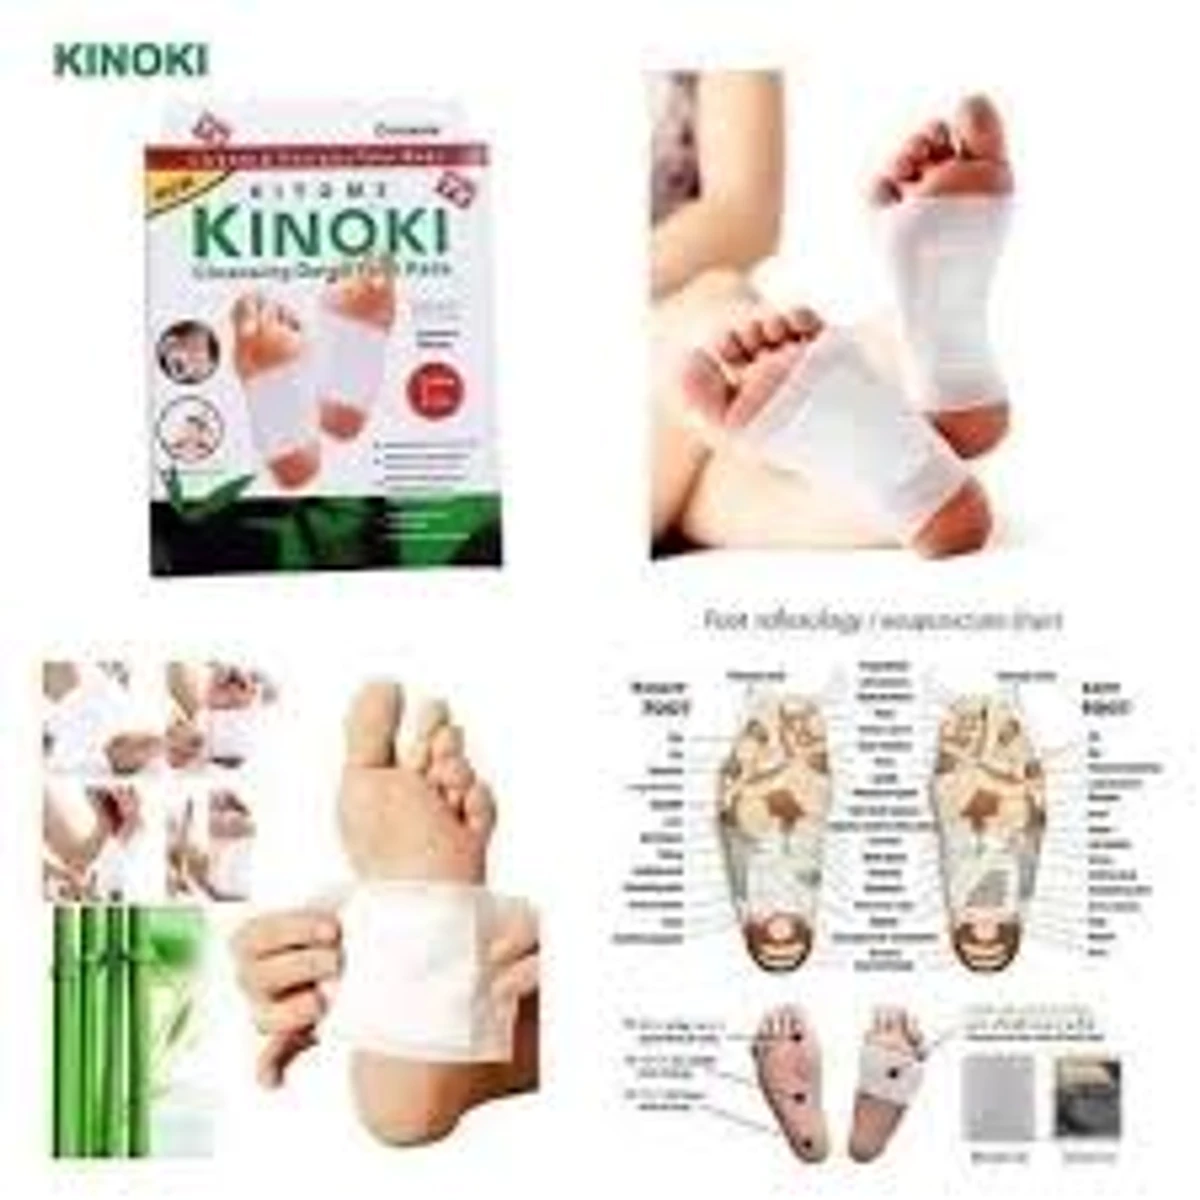 Original kinoki detox foot pad 5 Packet(50 pcs )